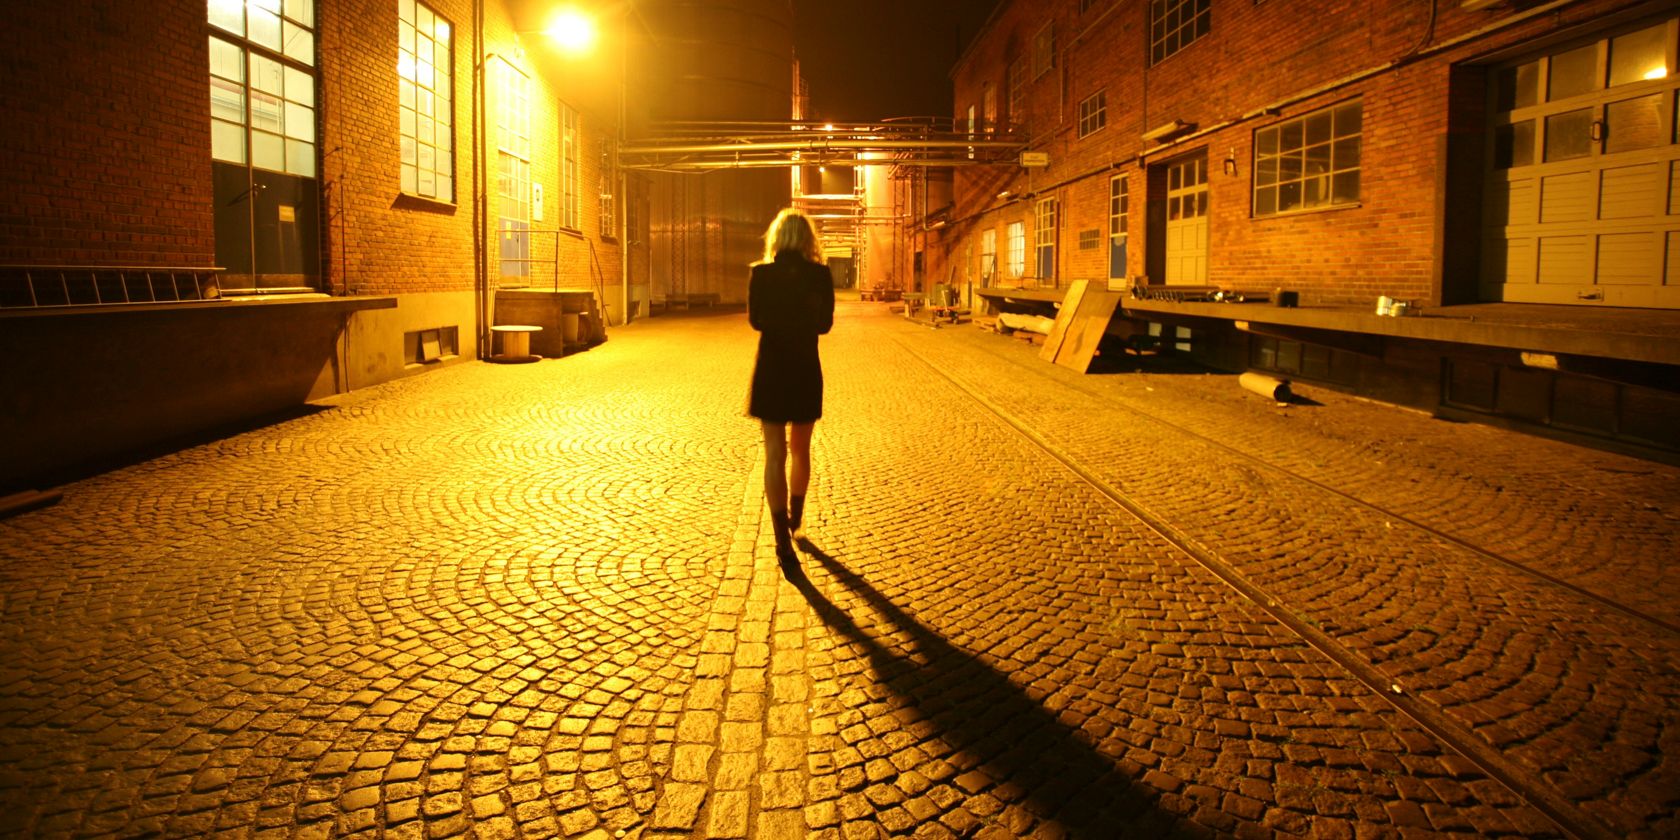 A woman walks alone down a city street at night